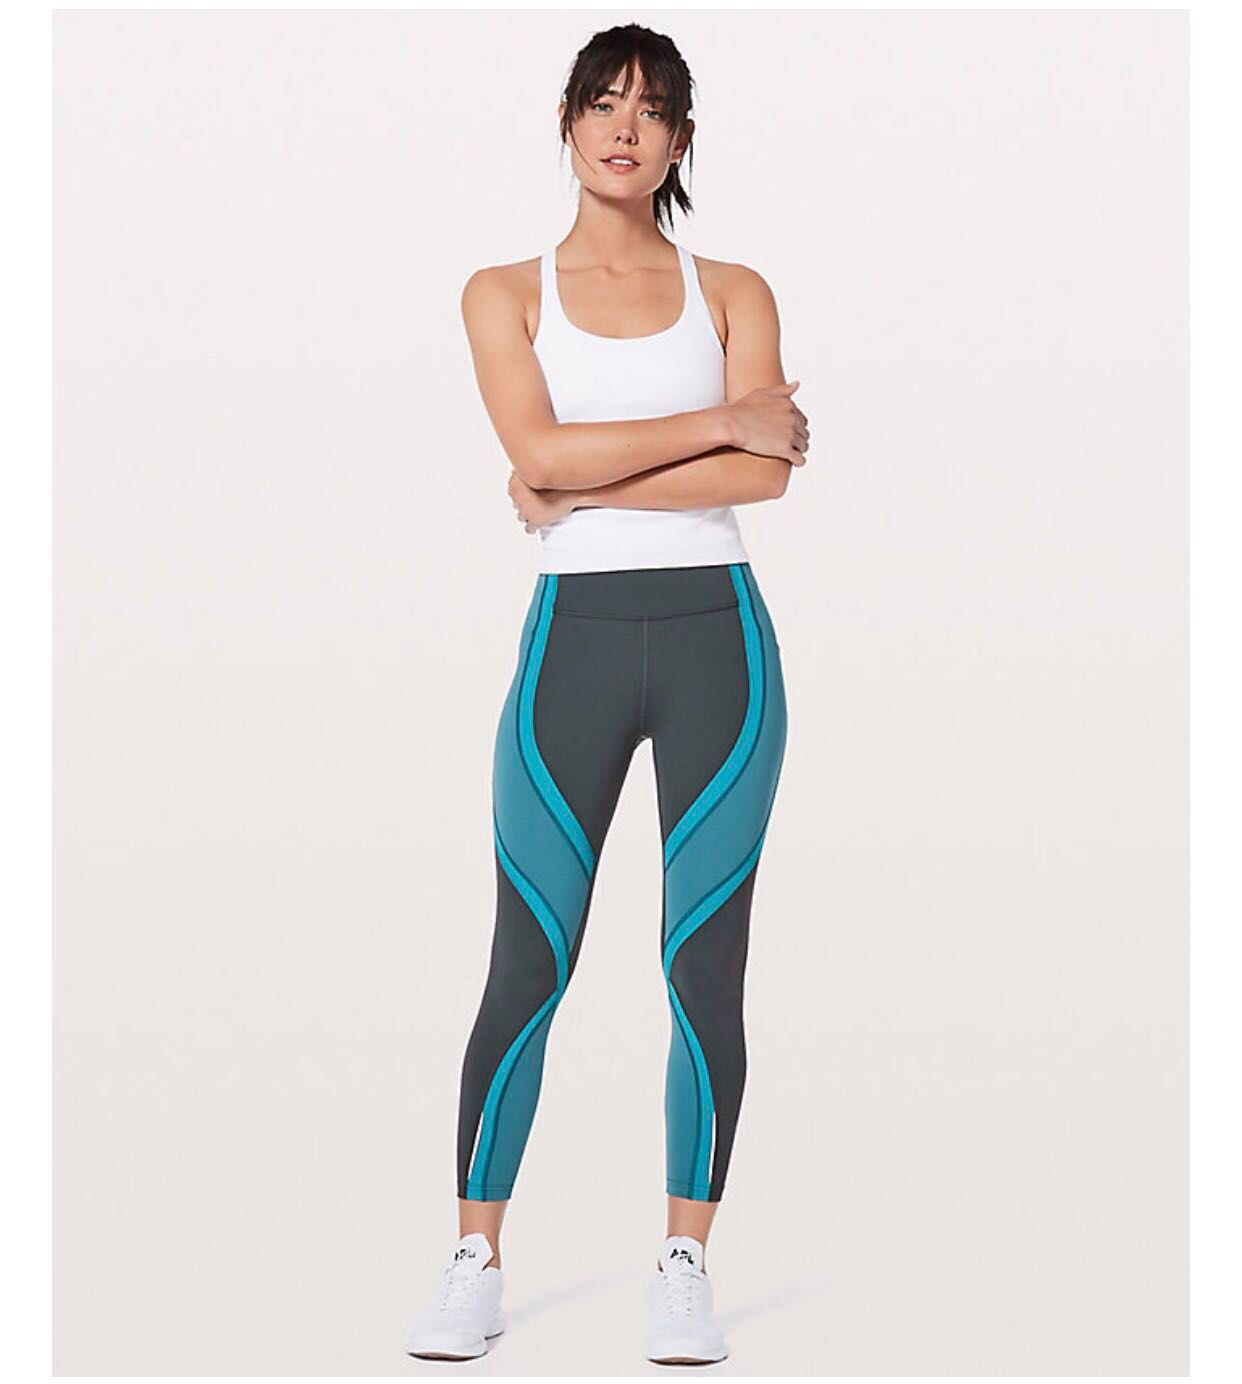 Lululemon leggings size 8 - Athletic apparel